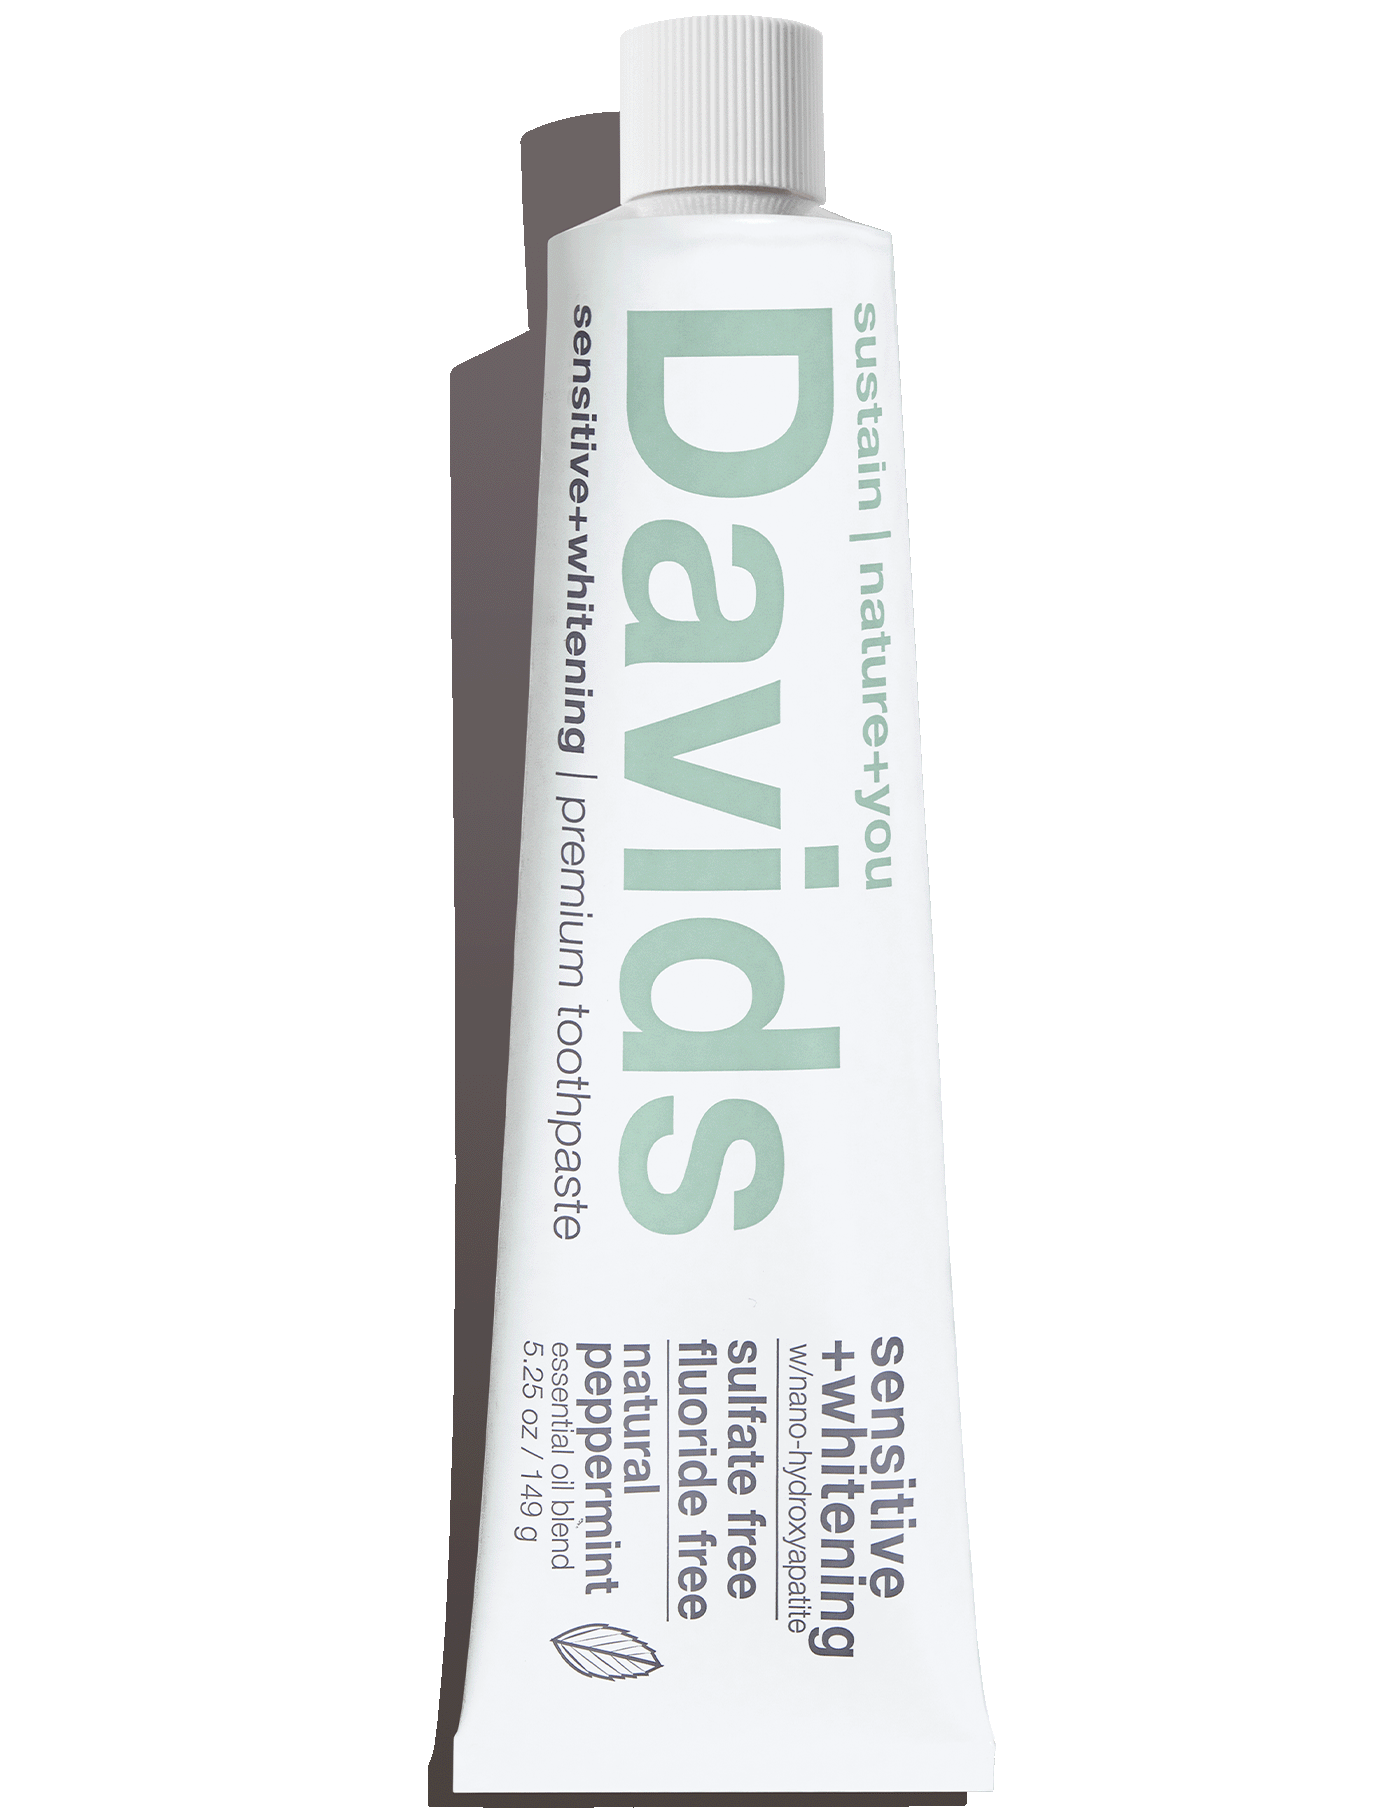 Davids sensitive+whitening nano-hydroxyapatite premium toothpaste / peppermint ***LIMIT QTY 1 DUE TO LOW SUPPLY***